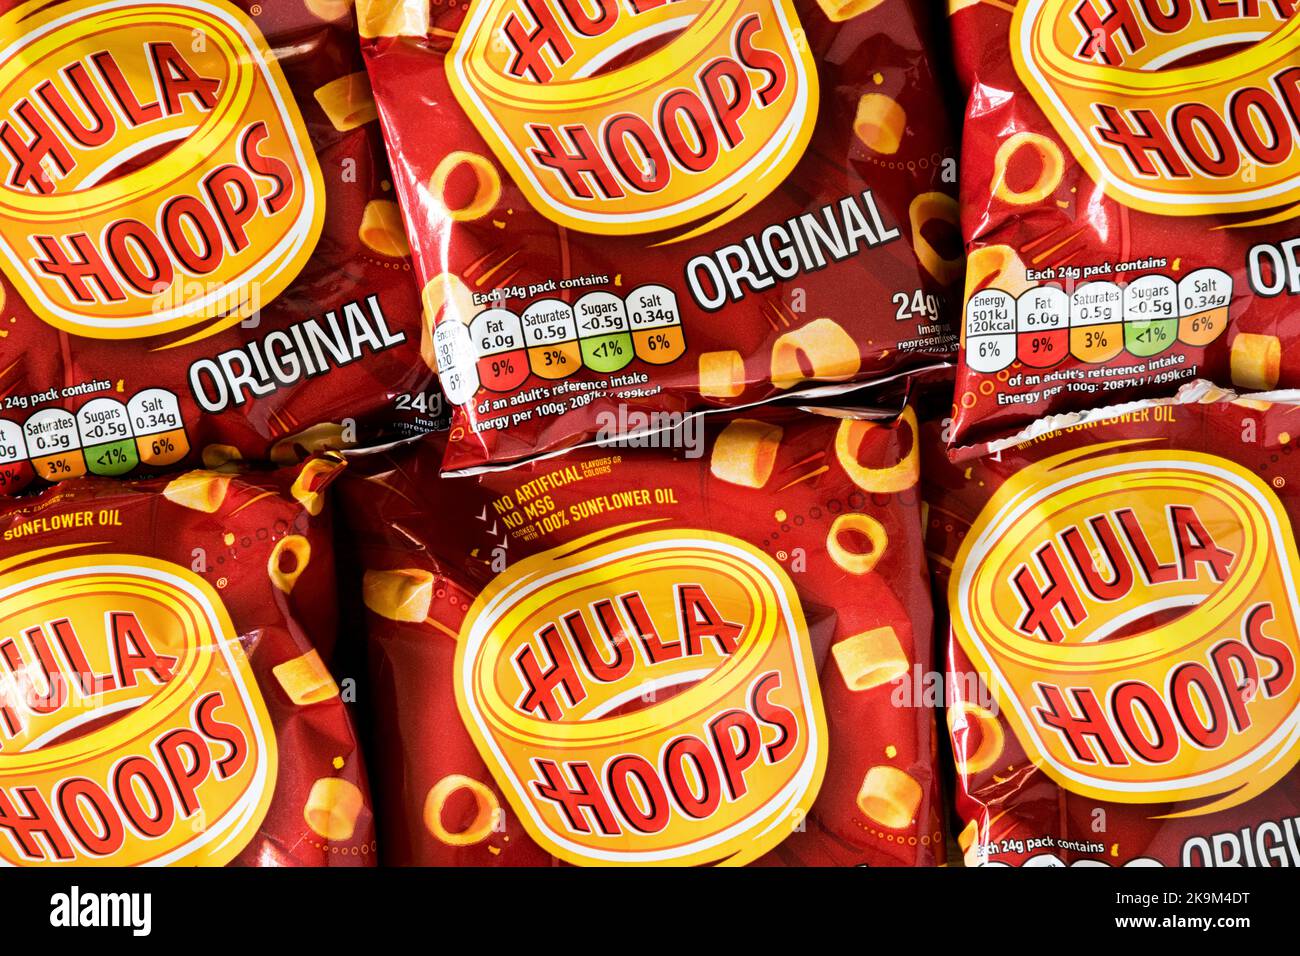 Packets of original flavour Hula Hoops potato snacks. Stock Photo